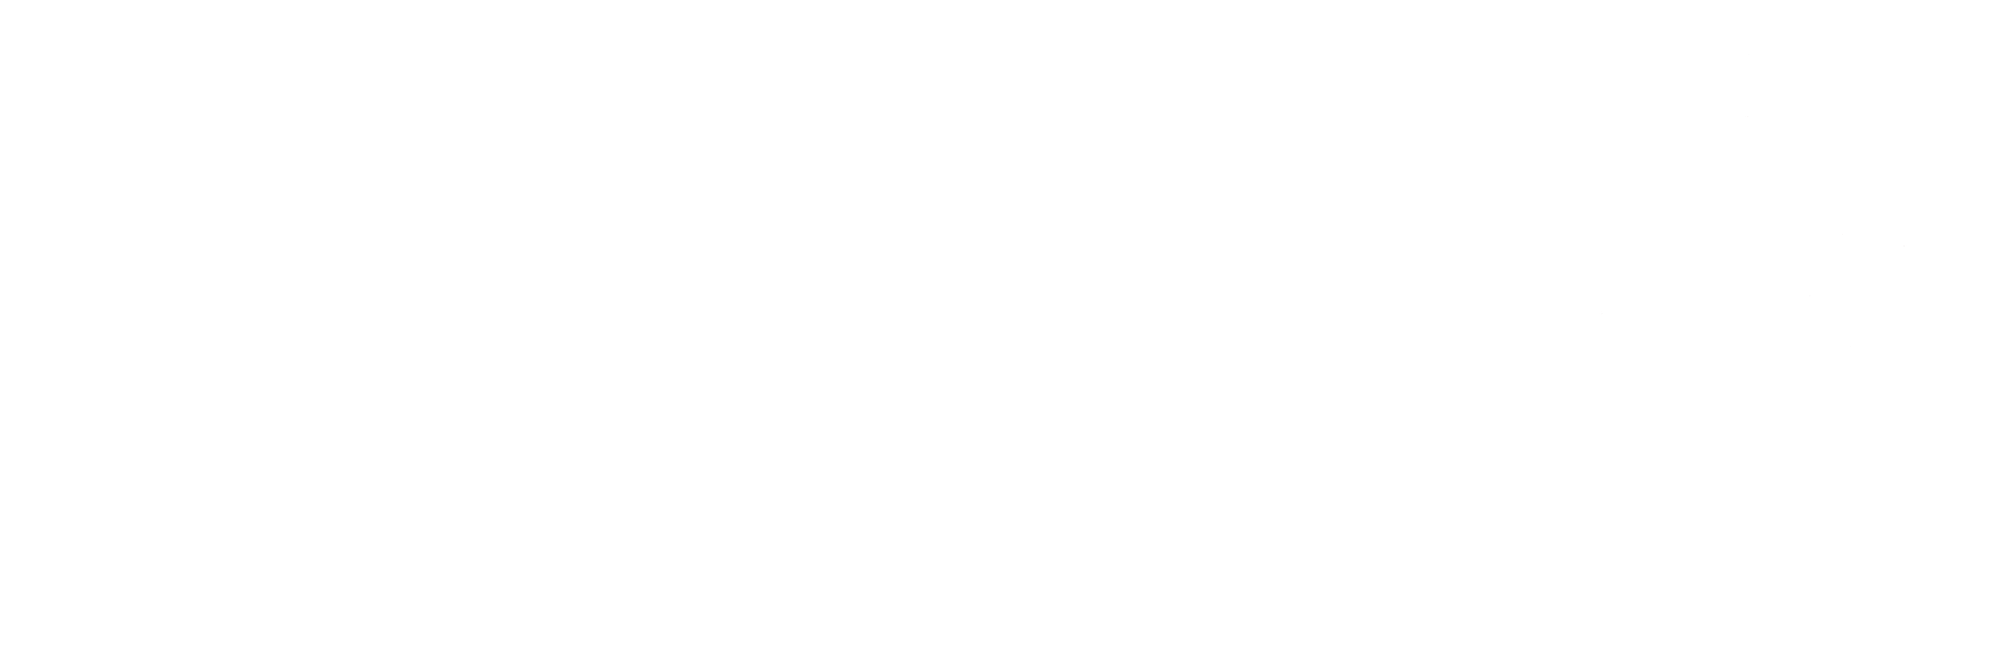 Gaetano's Italian Restaurant 30th Logo